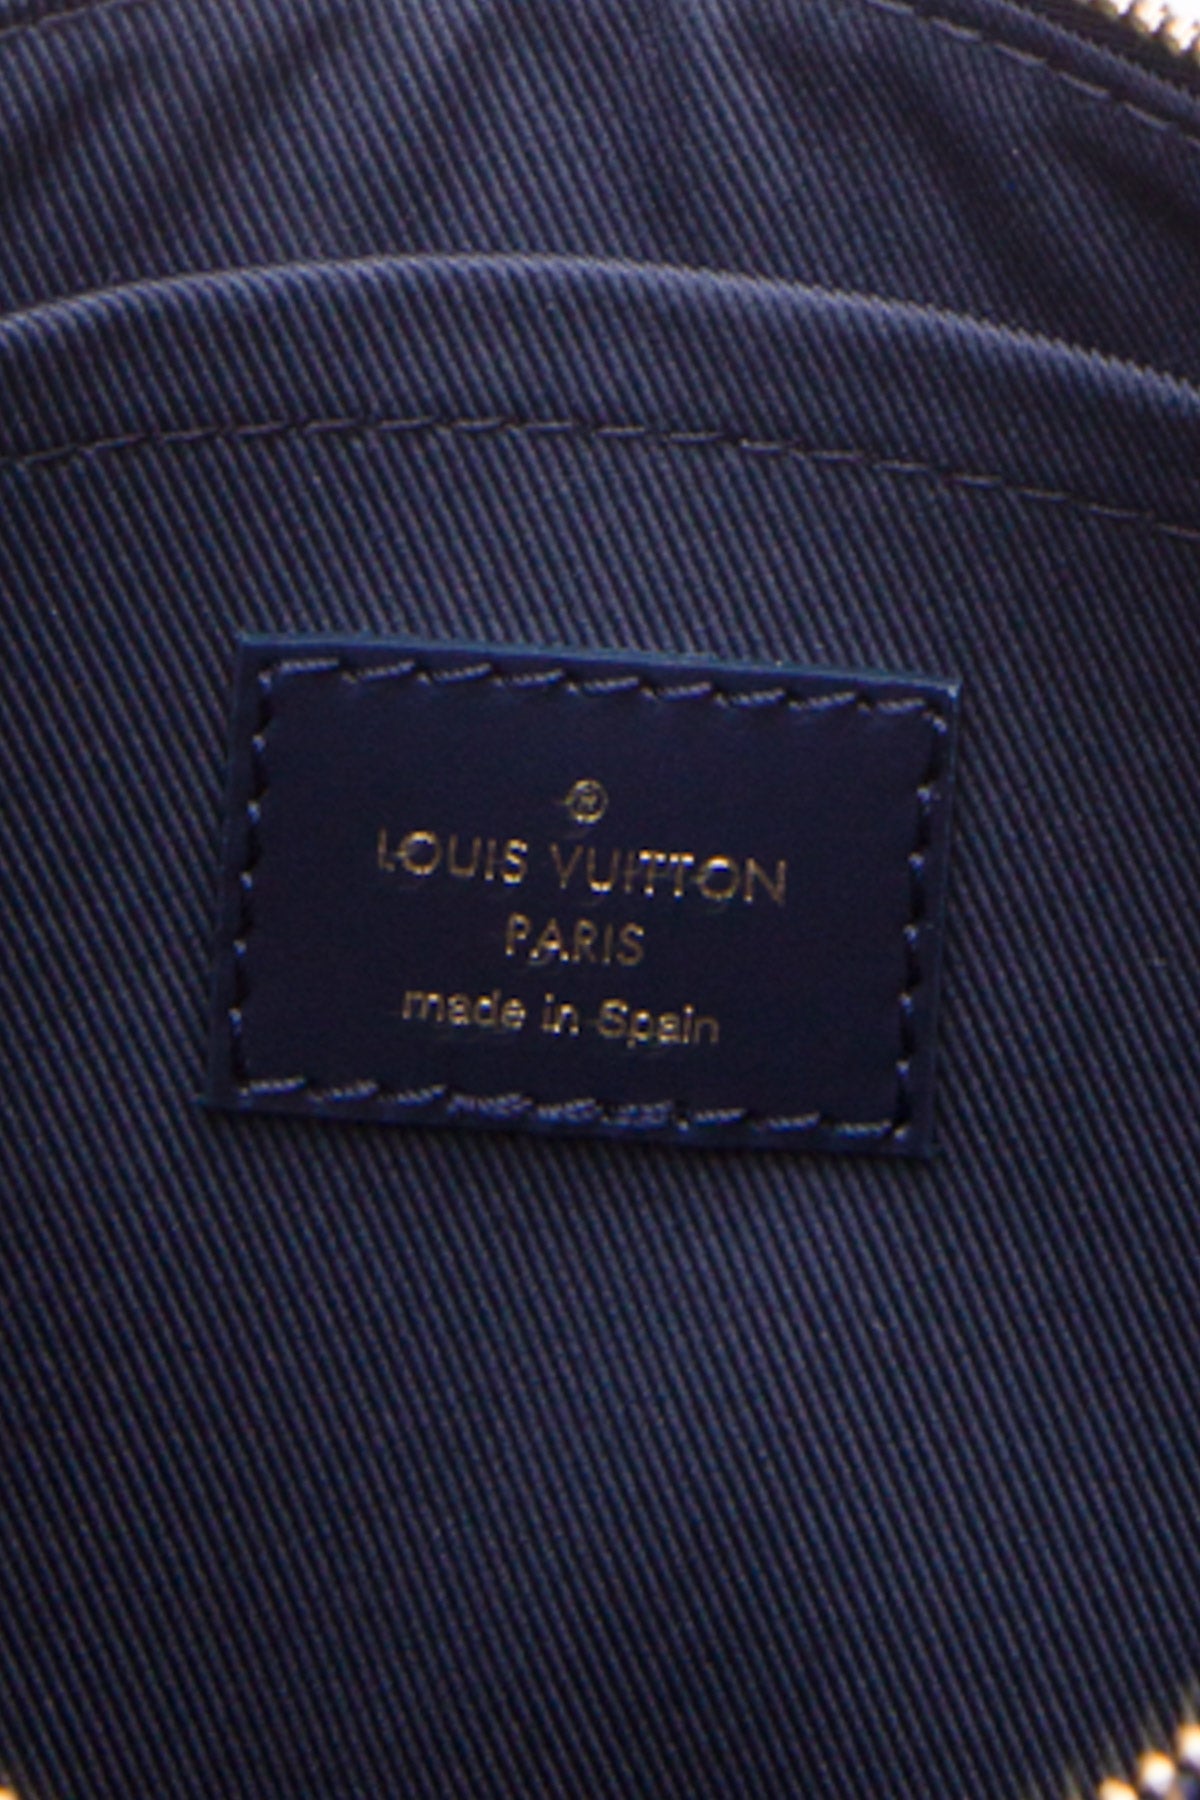 Louis Vuitton Neverfull Wristlet - $380 - From Coj